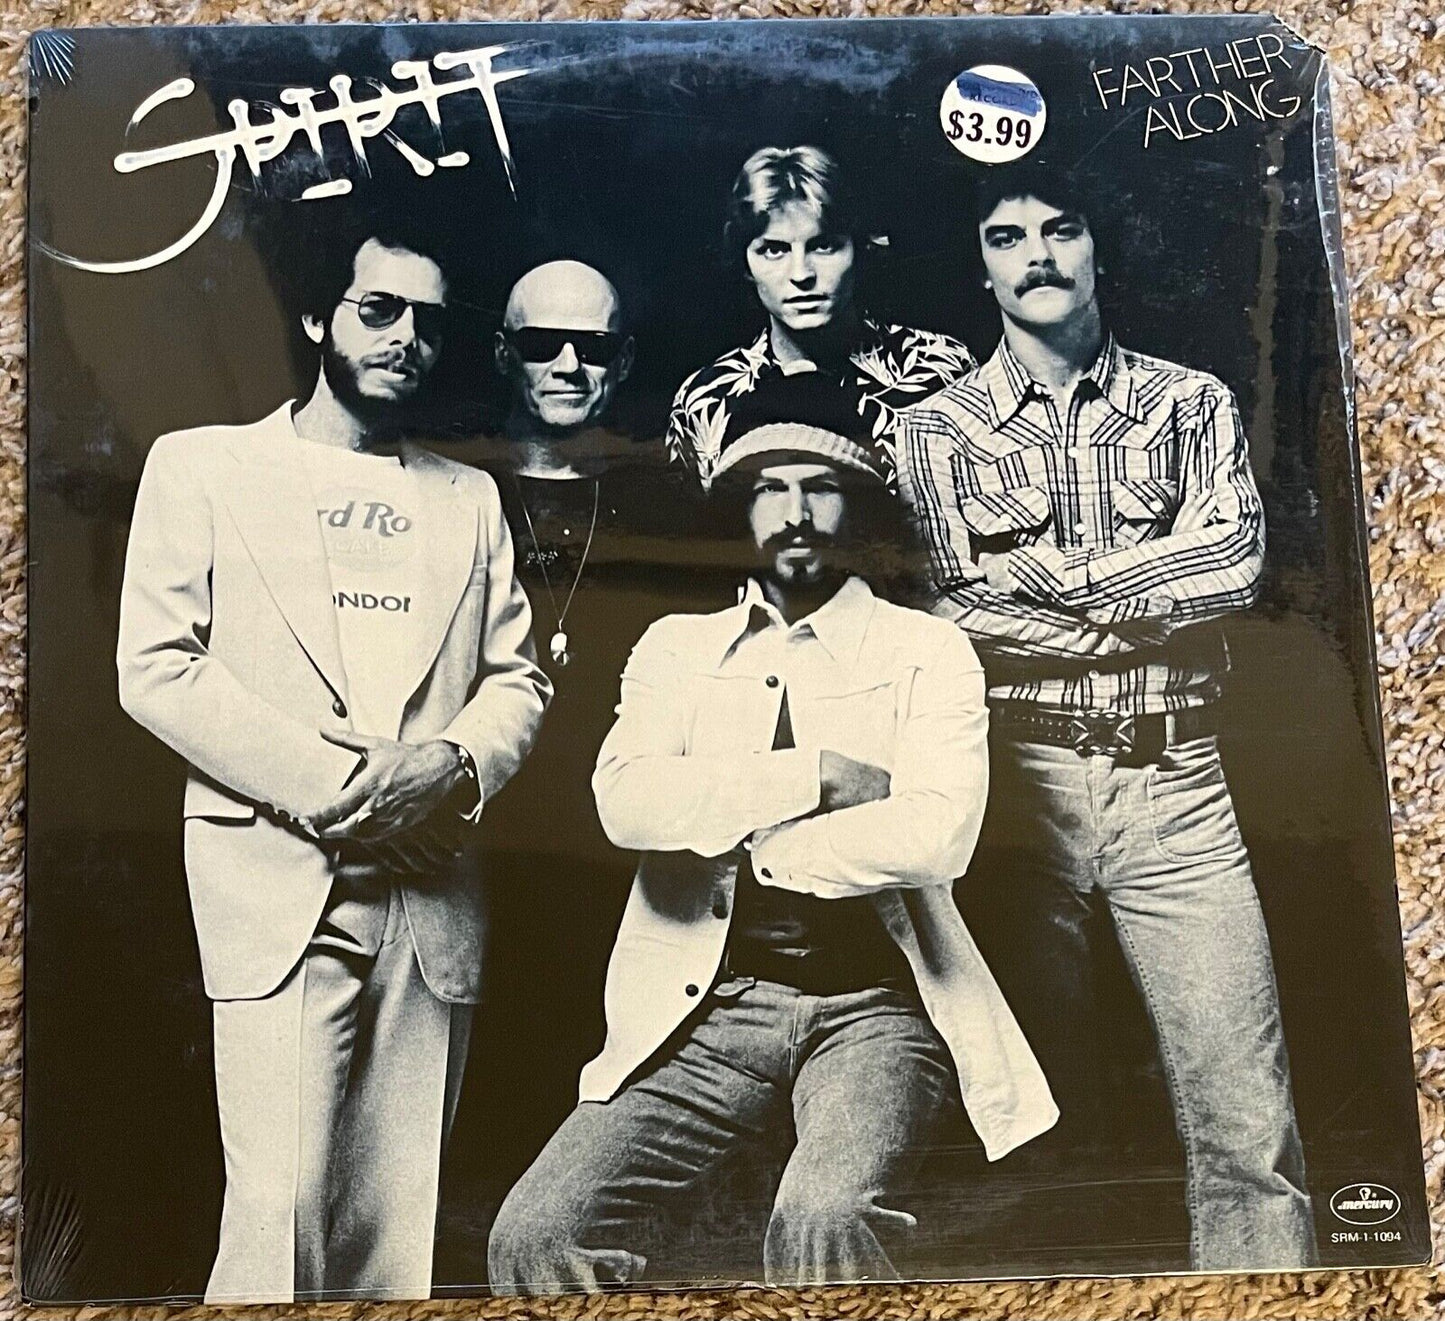 Spirit– Farther Along - SEALED LP album